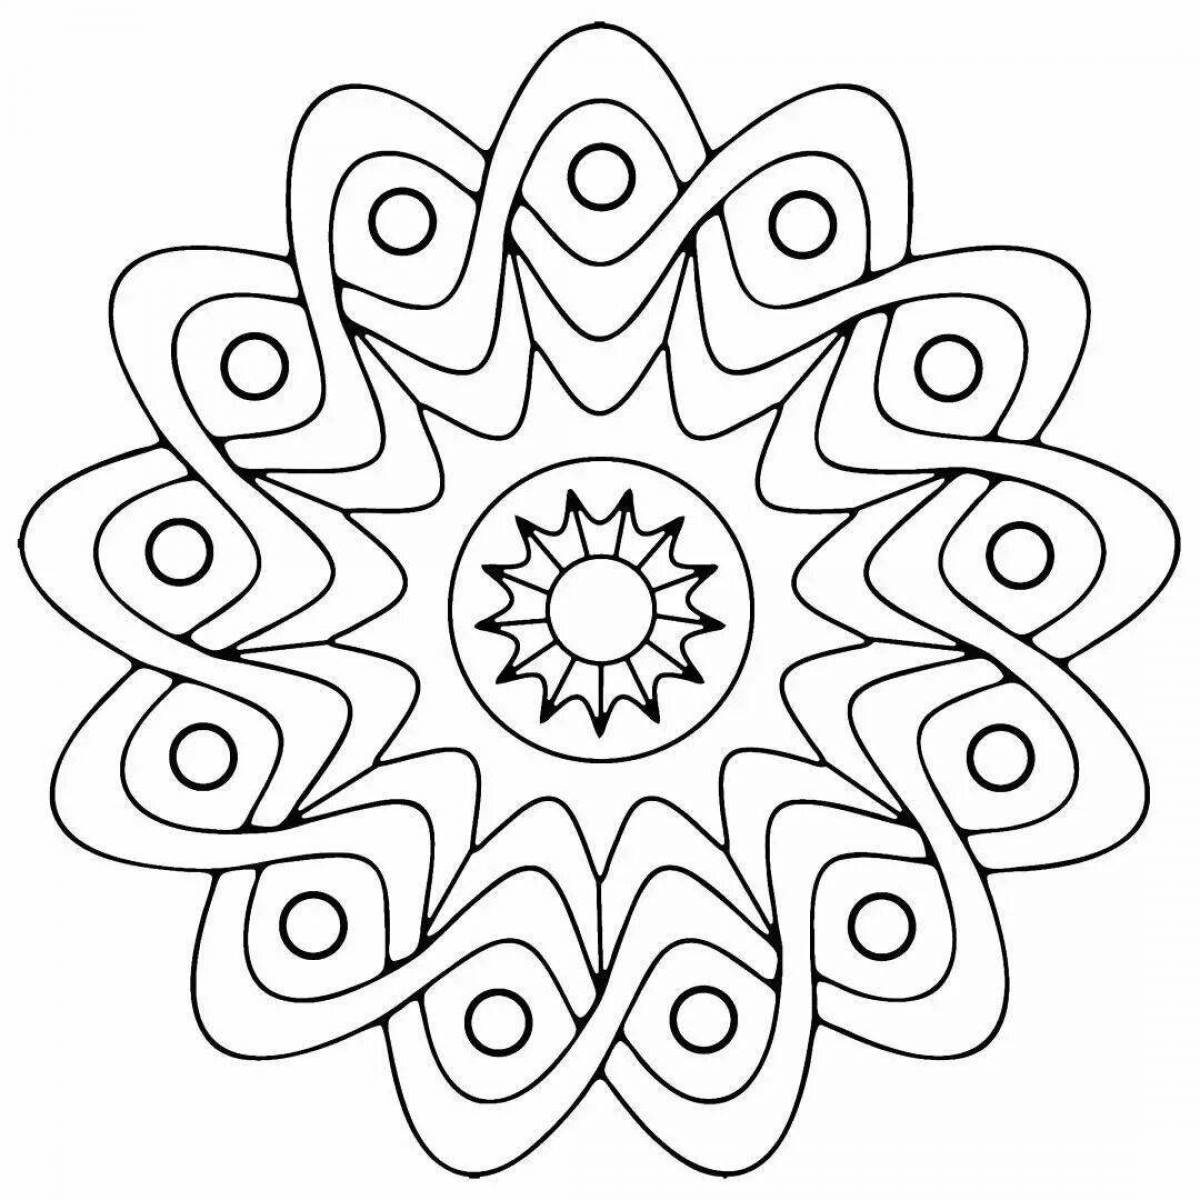 Wonderful coloring simple mandalas